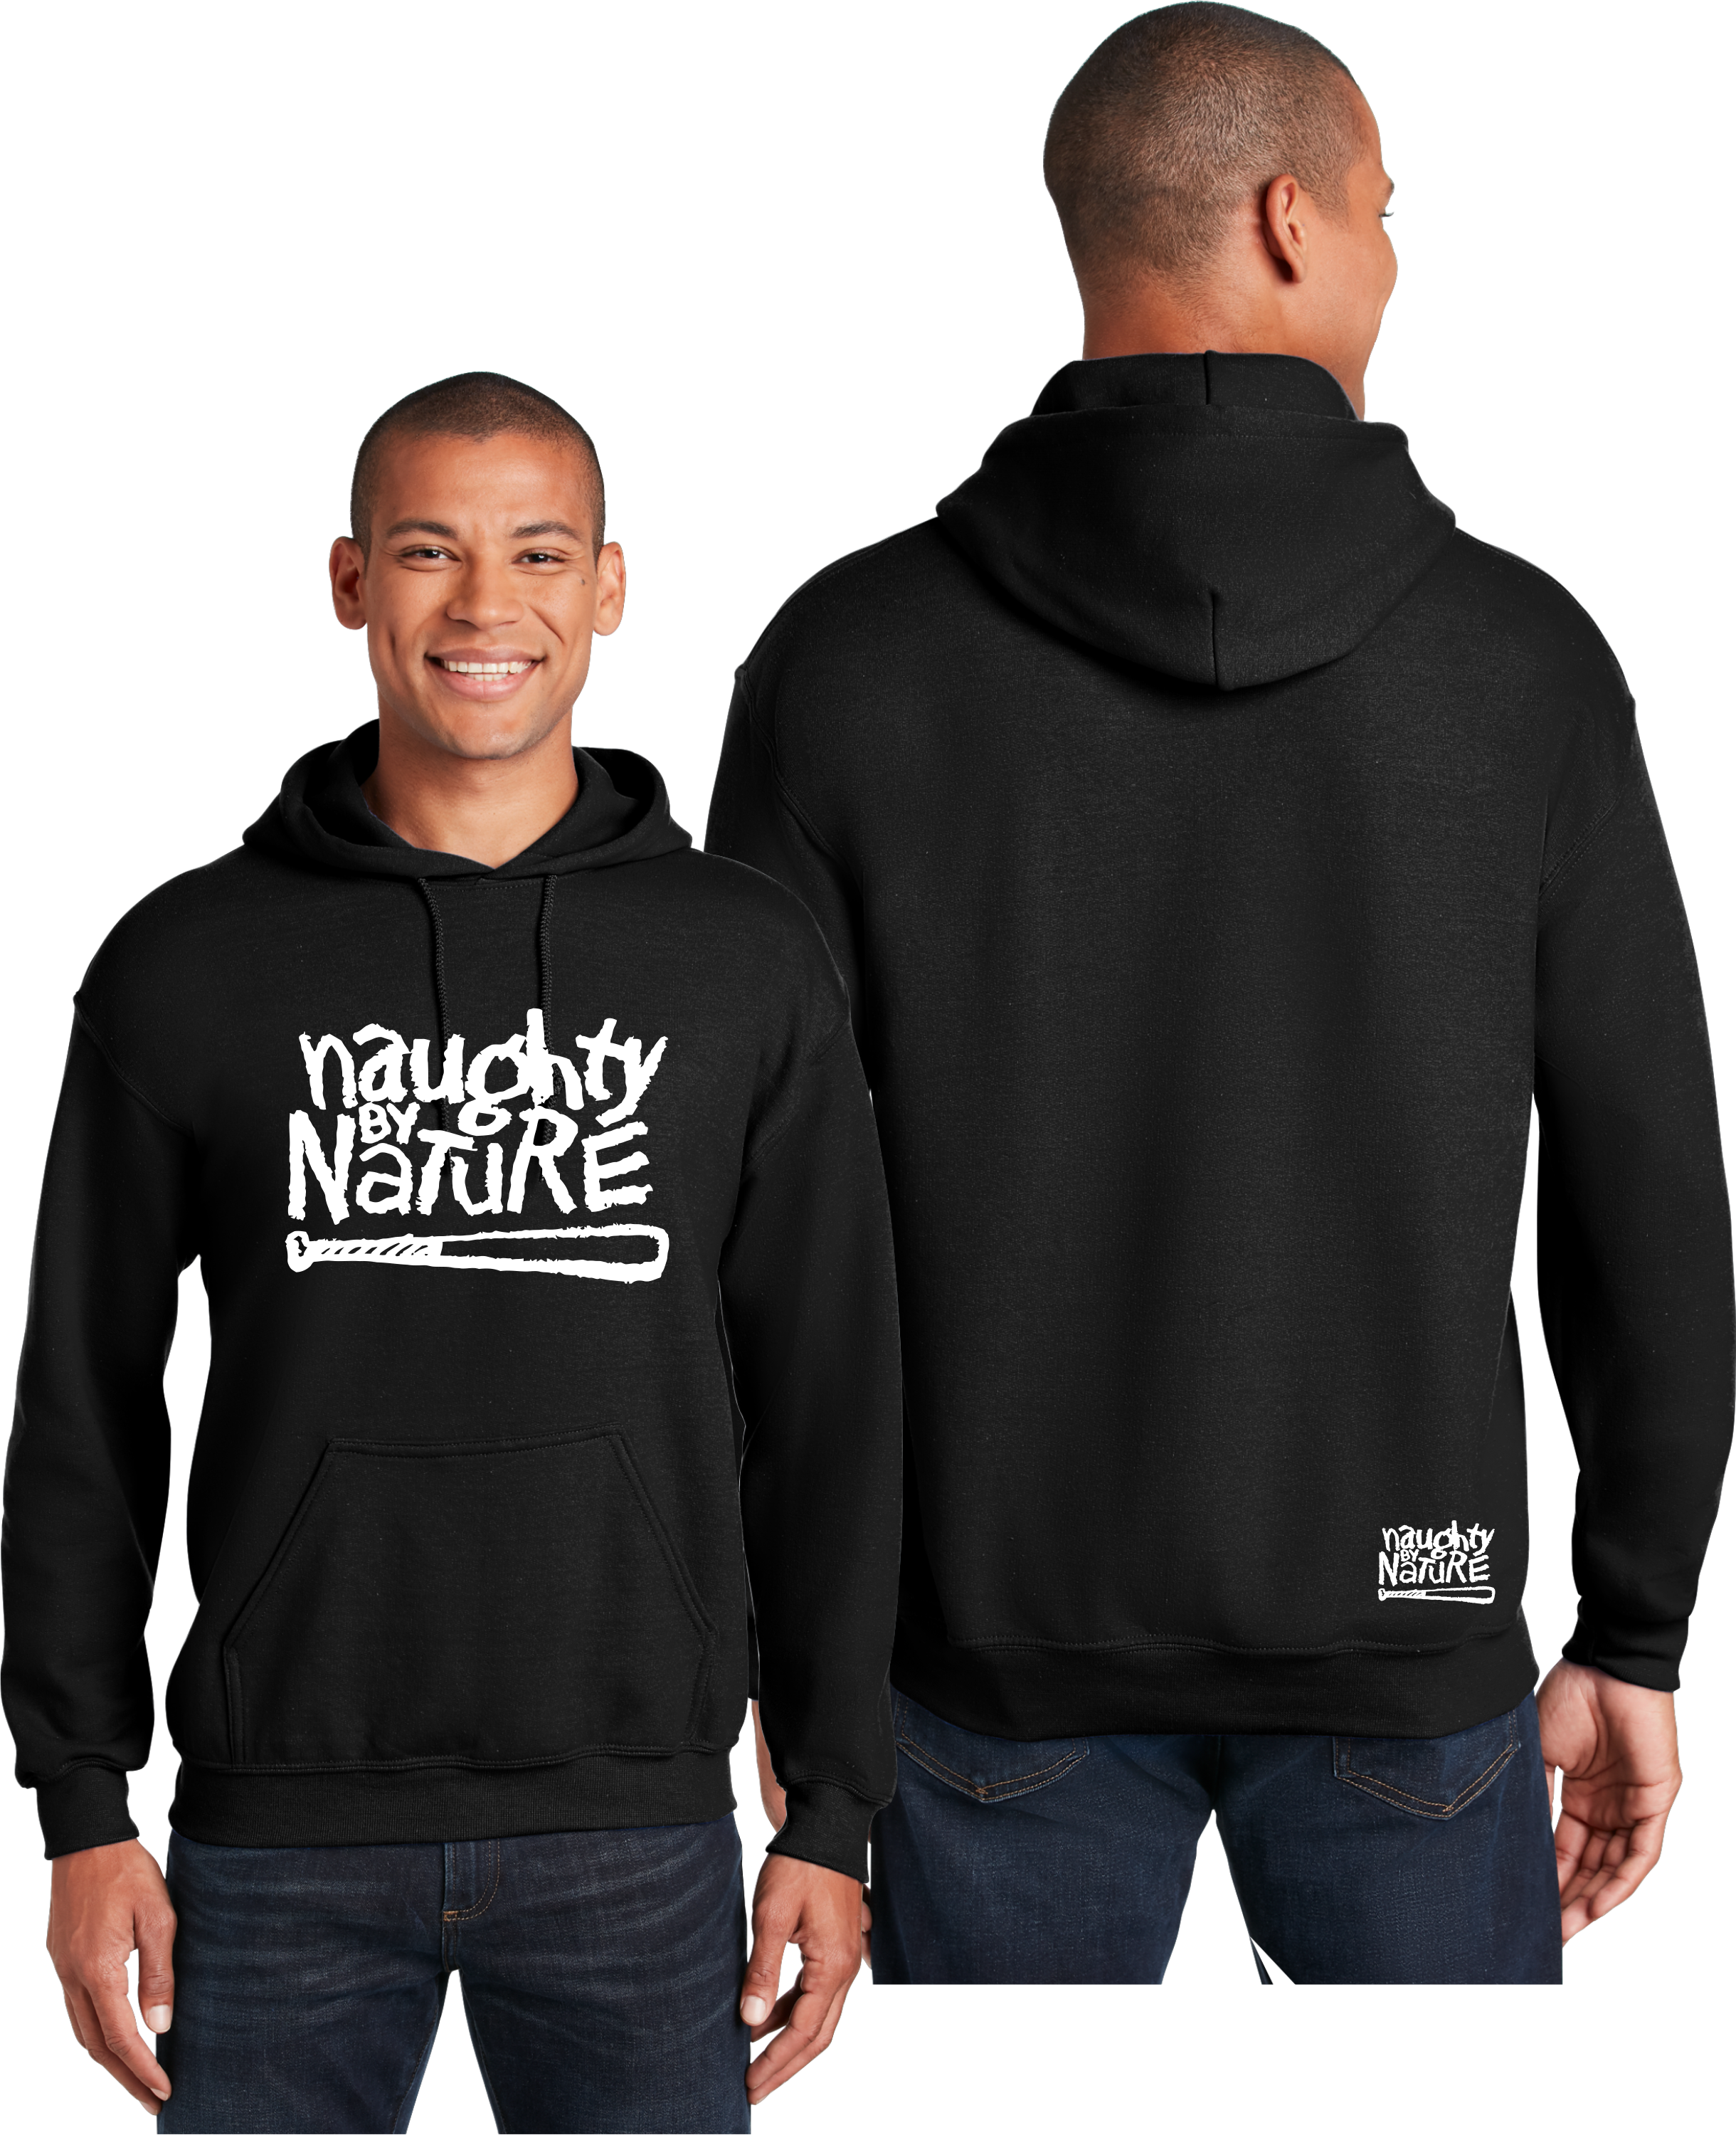 By Nature Music Hooded Sweatshirt – Pacific Hoodies